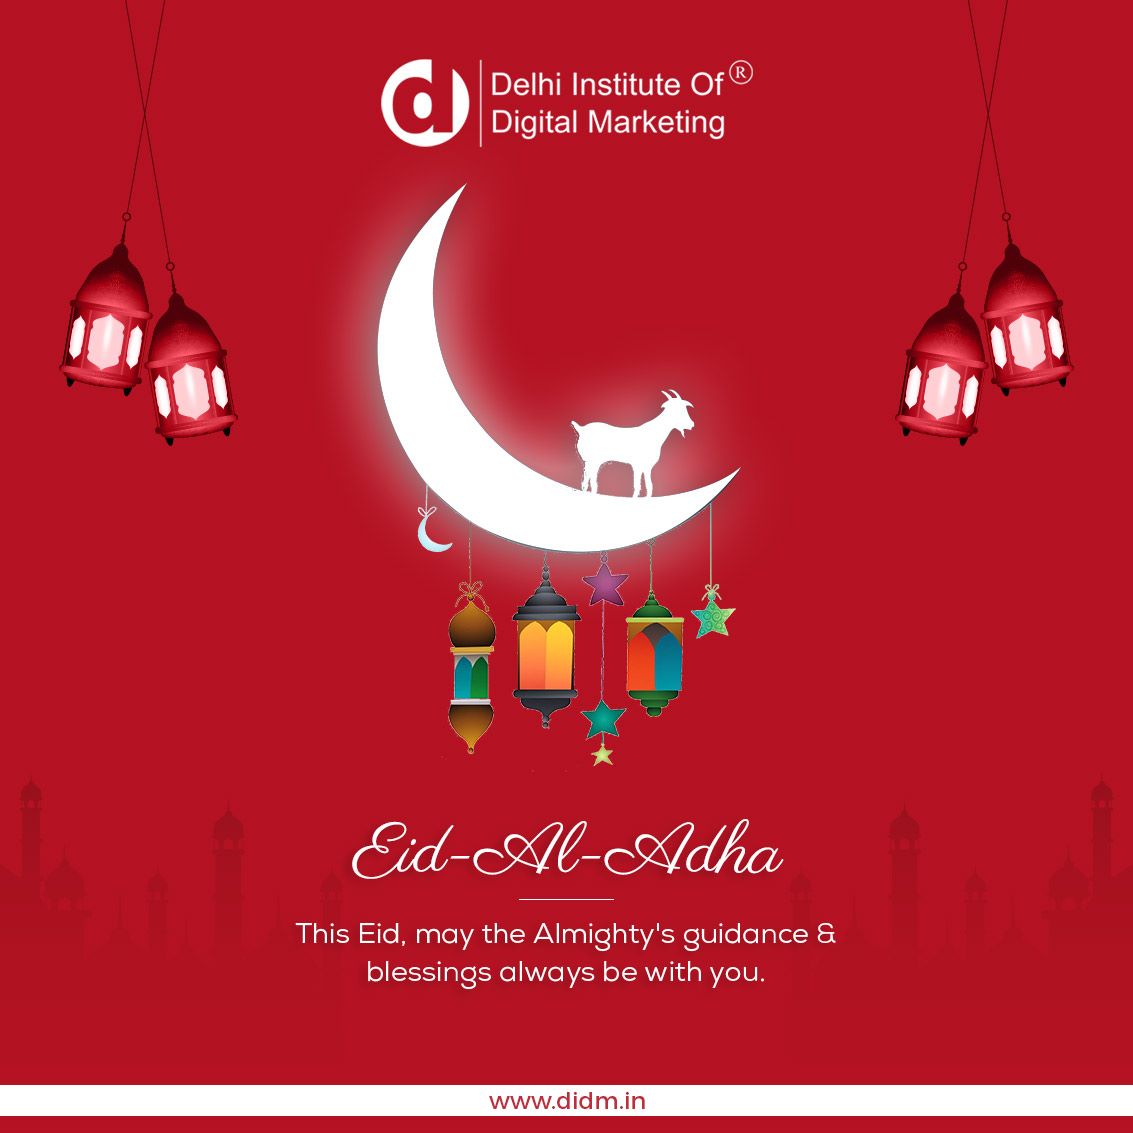 Eid al-Adha Mubarak To All Of You From DIDM!